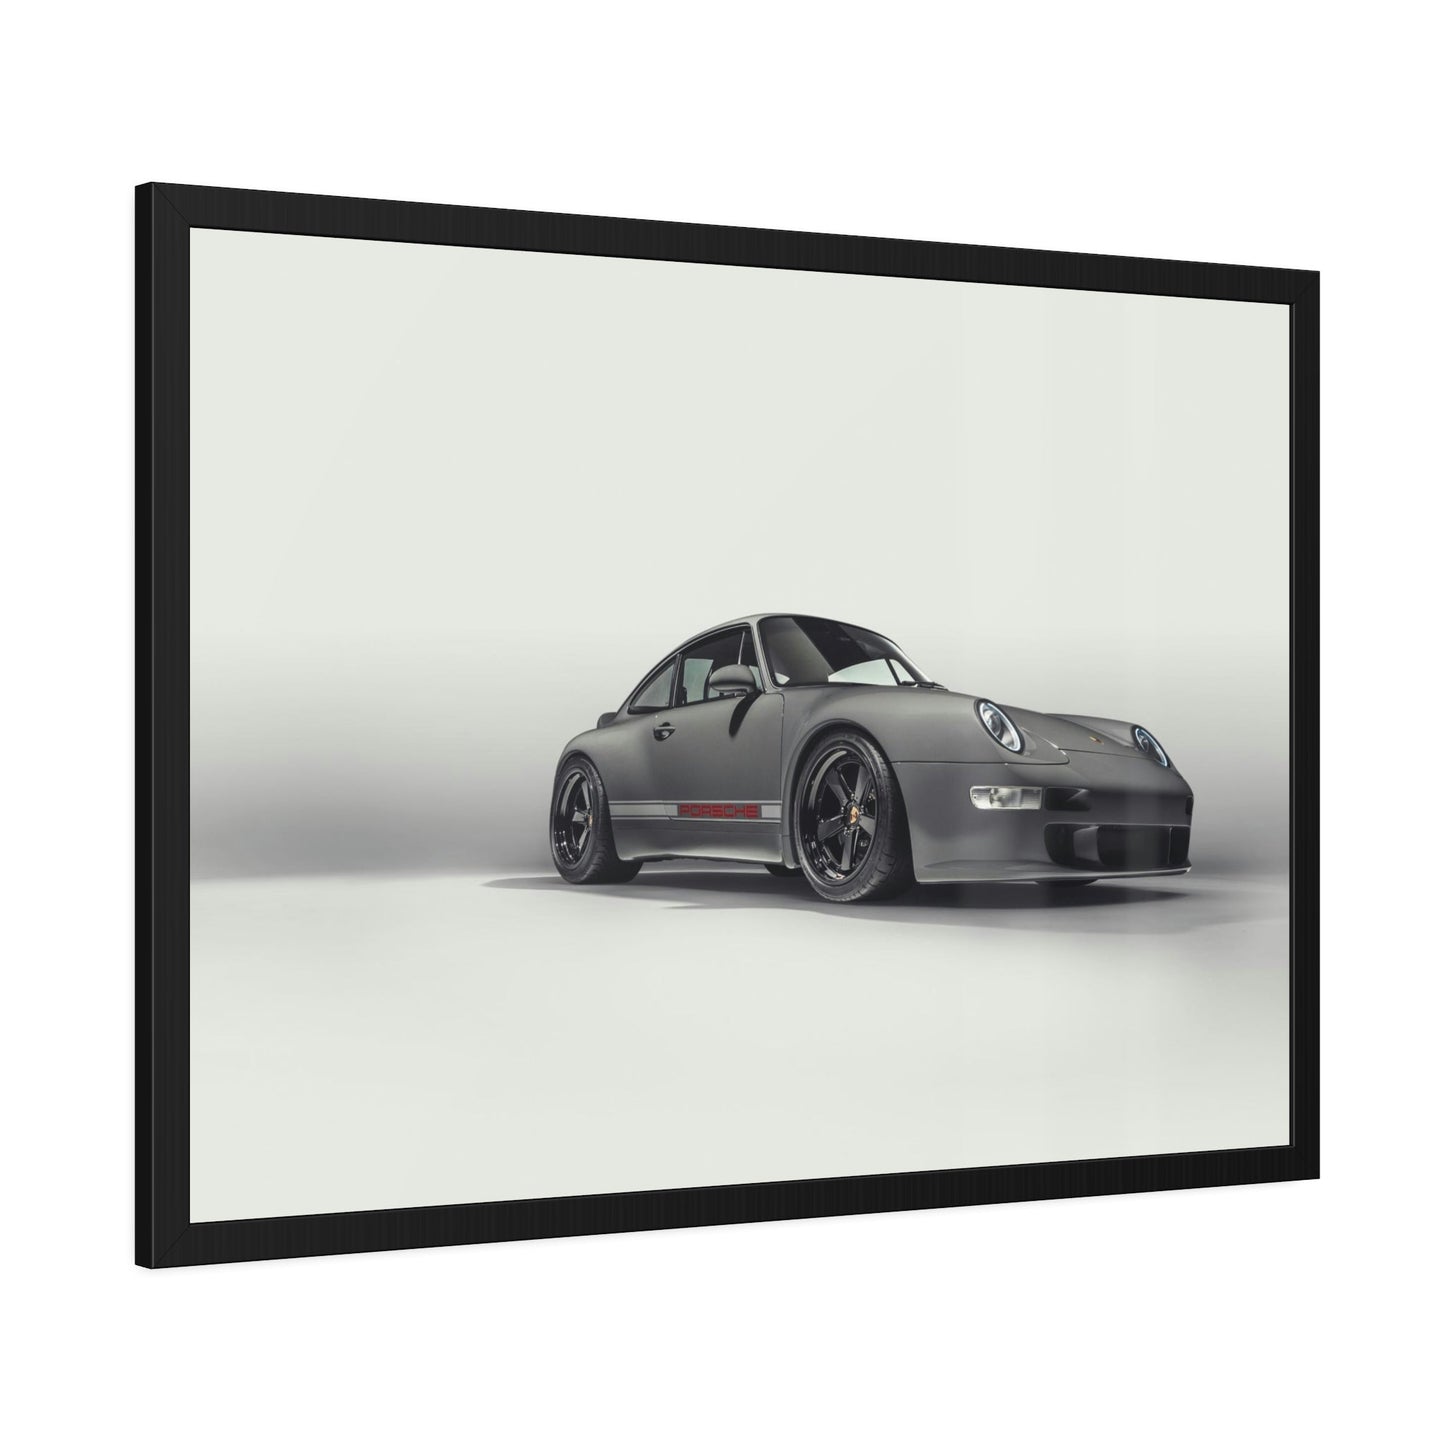 Porsche Portraits: A Wall Art Print That Captures the Unique Personality of Porsche Models